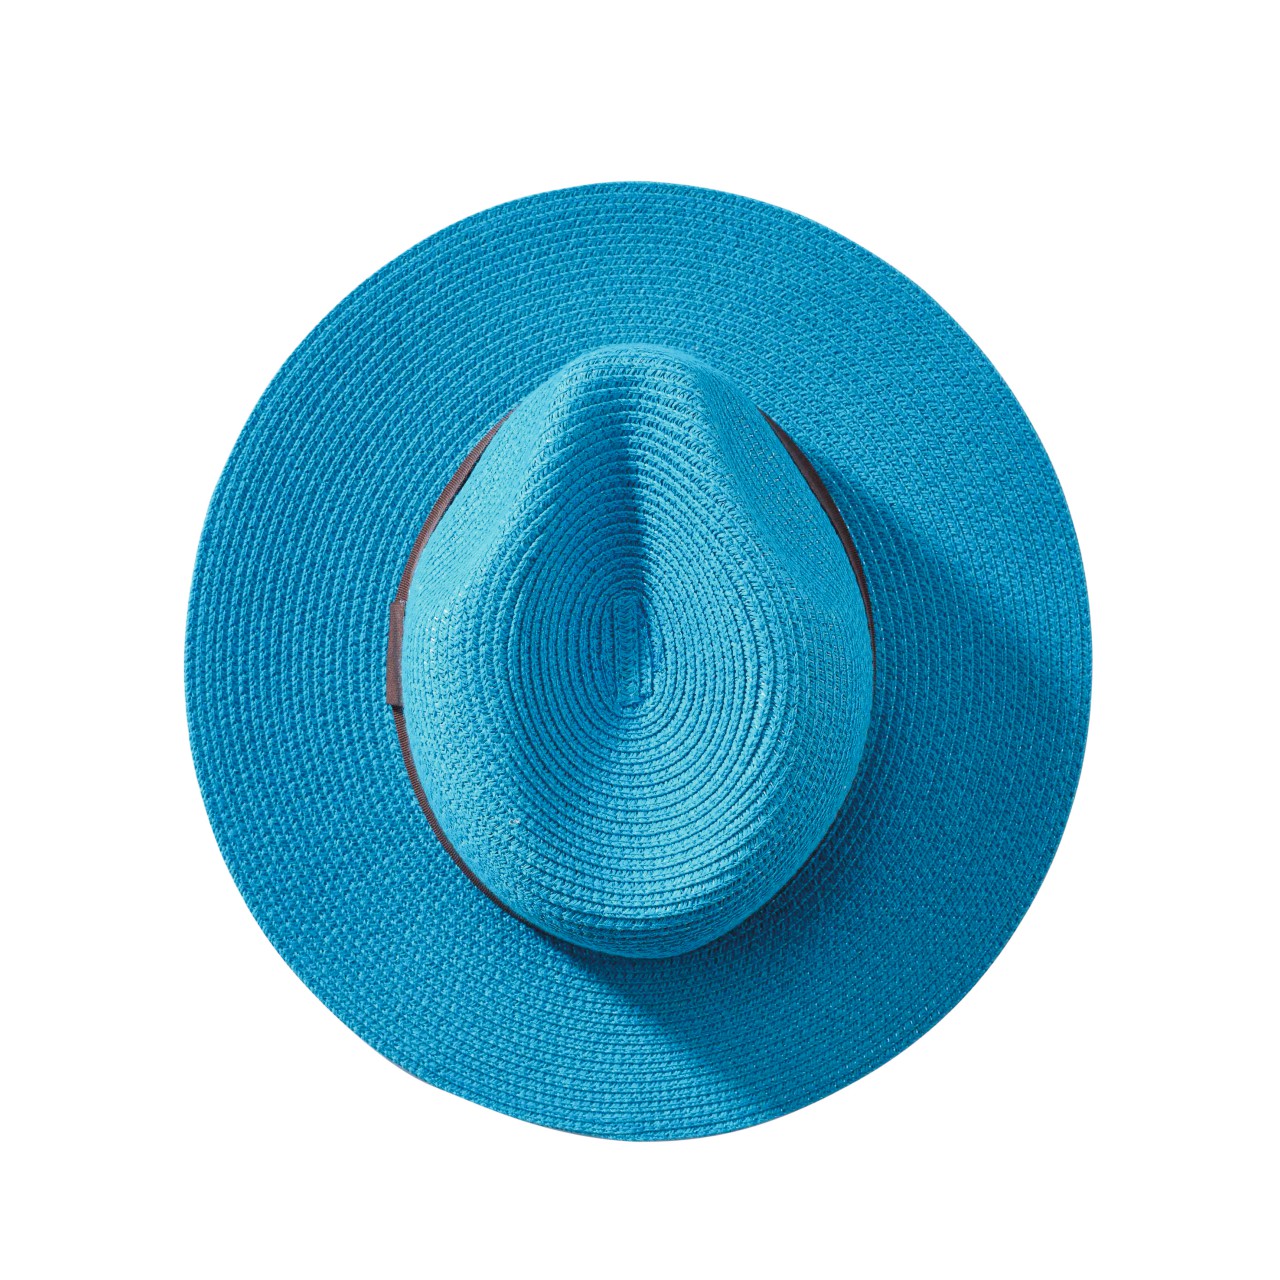 Ladies' Foldable Panama Hats